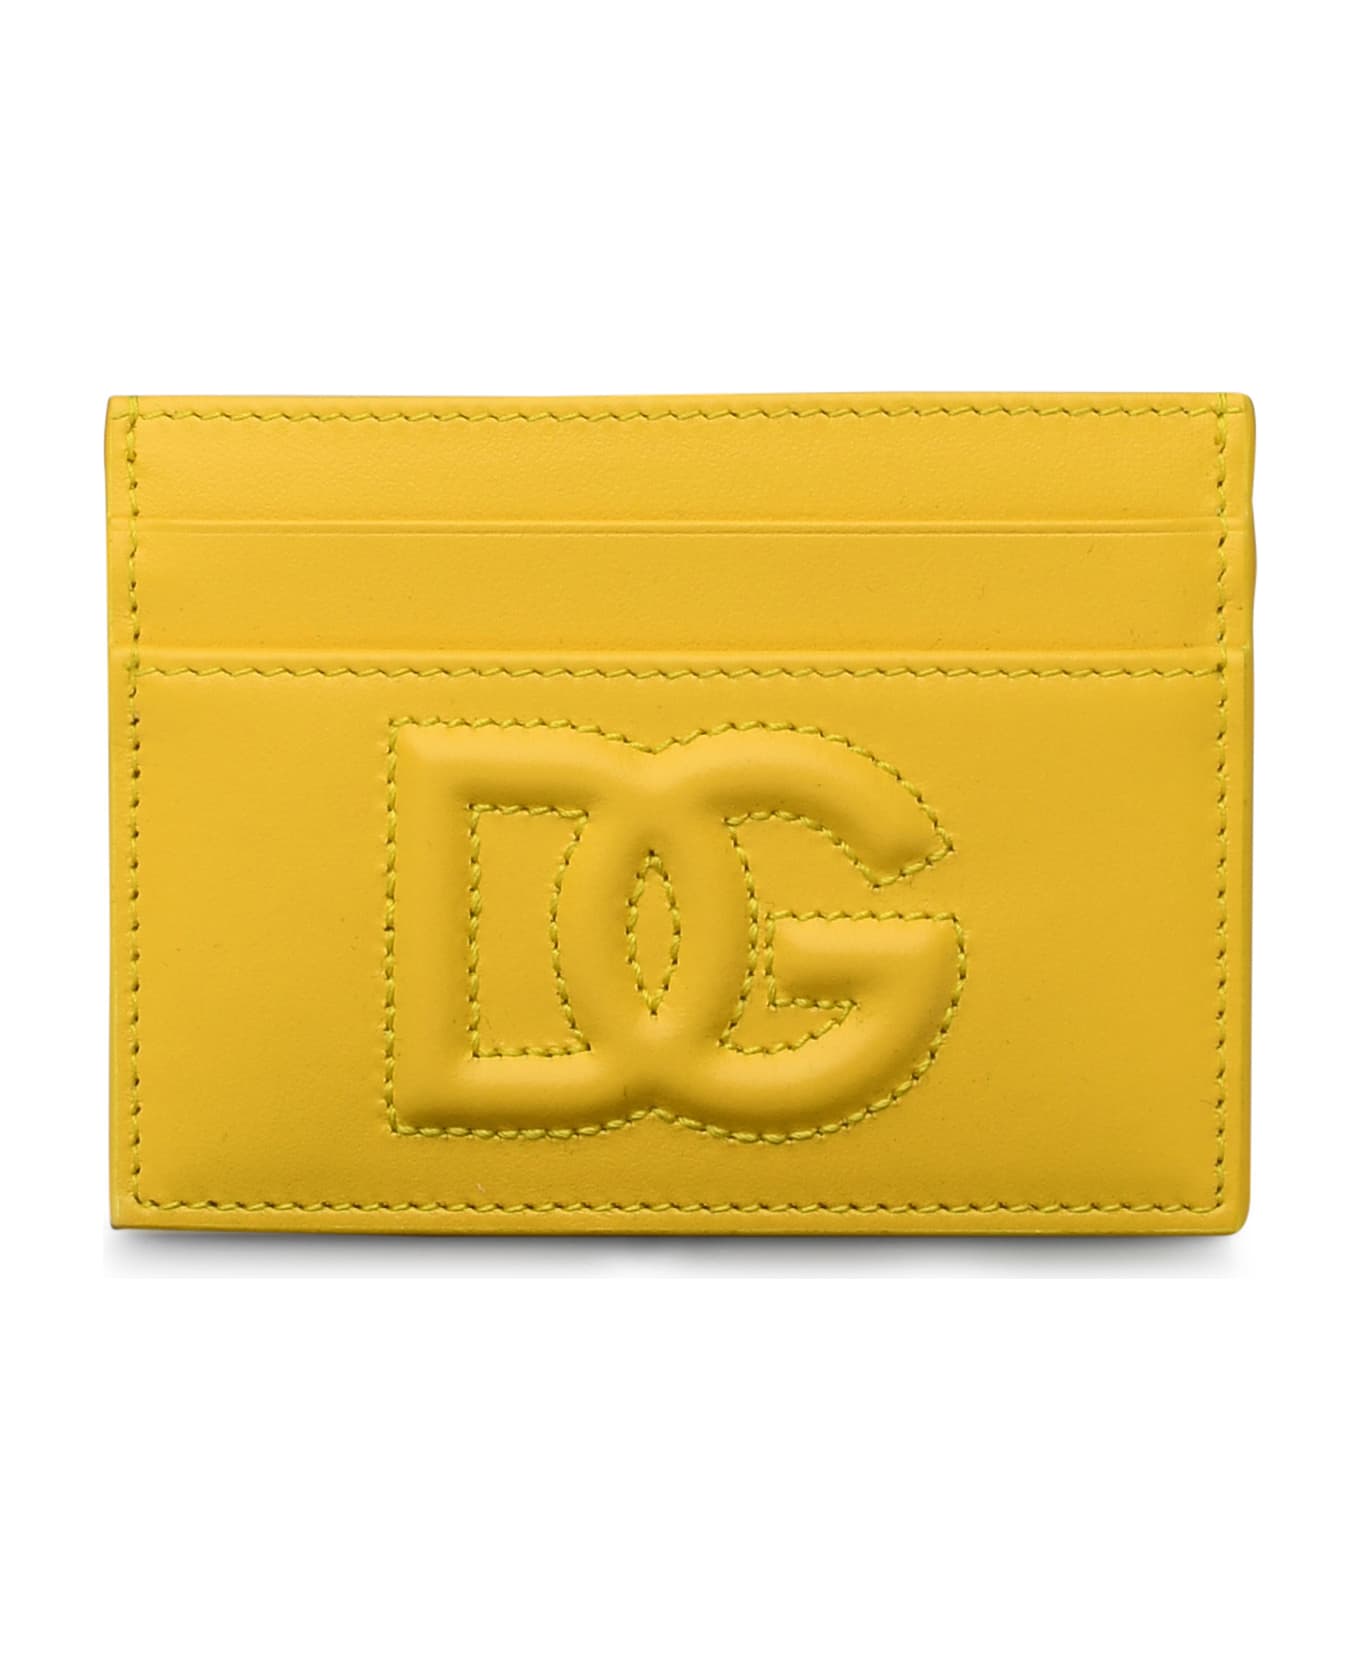 Dolce & Gabbana Leather Card Holder - GIALLO